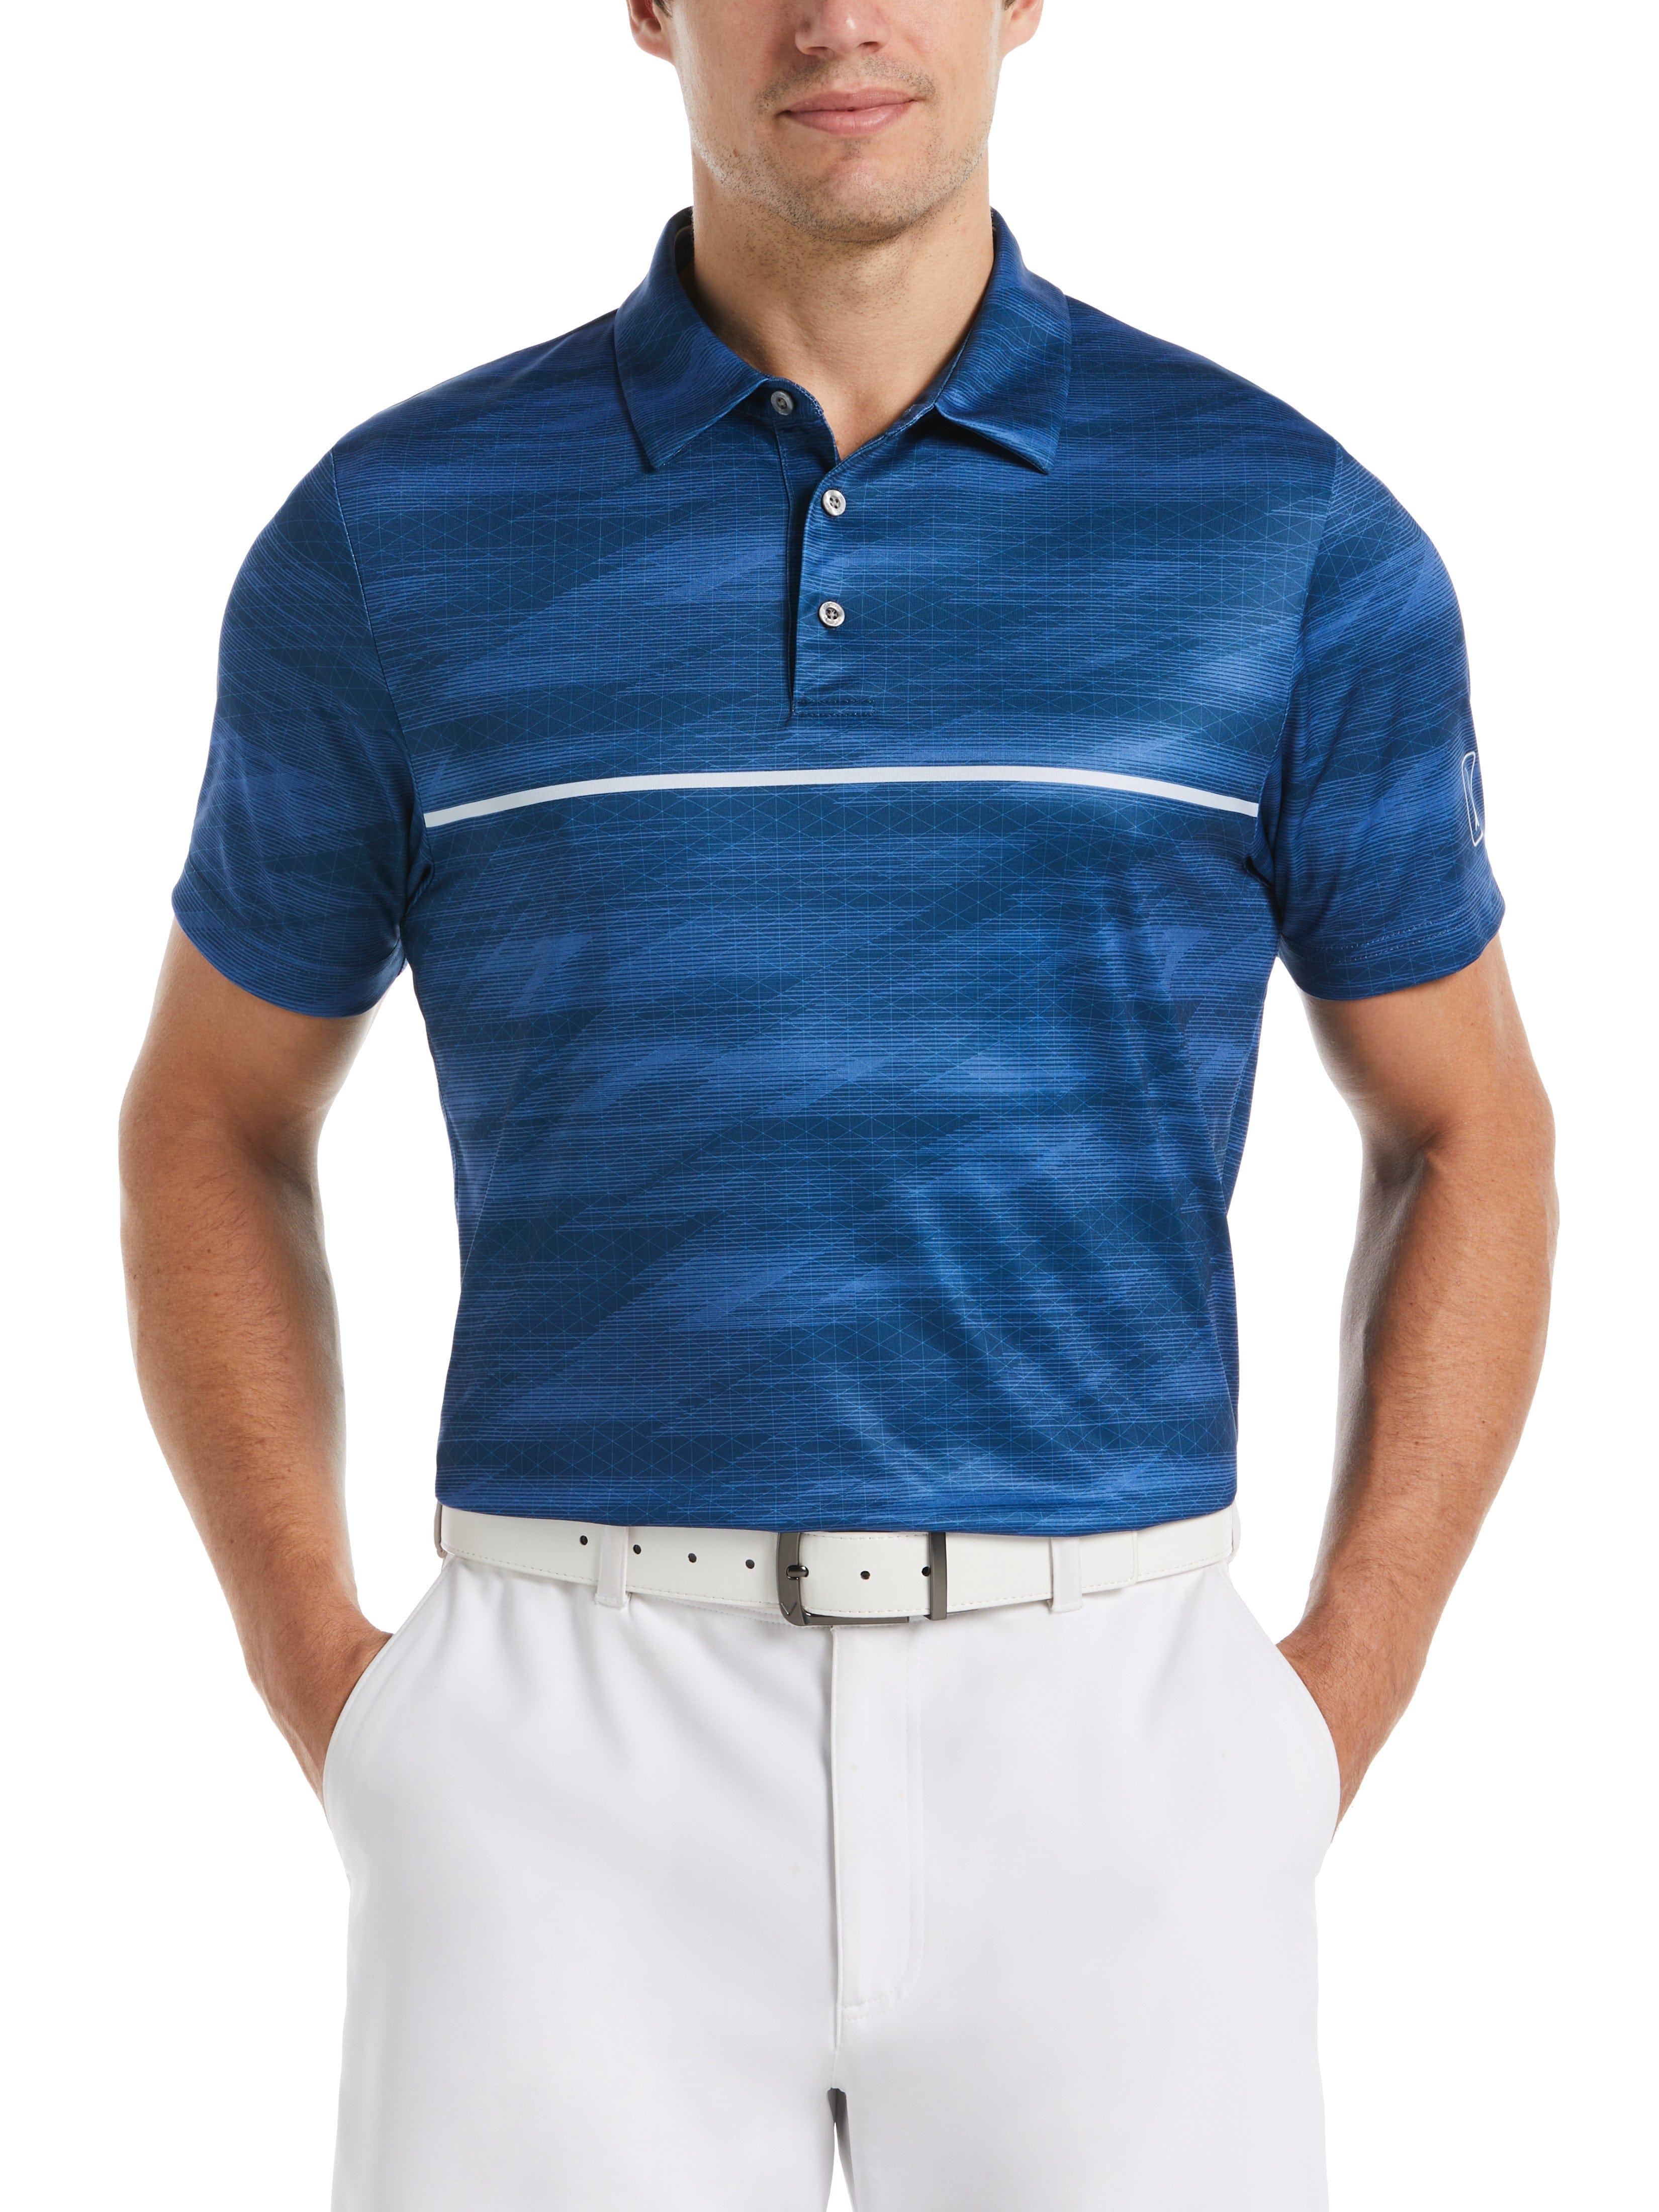 PGA TOUR Apparel Mens Digitized Chest Stripe Print Golf Polo Shirt, Size Medium, Poseidon Blue, 100% Polyester | Golf Apparel Shop